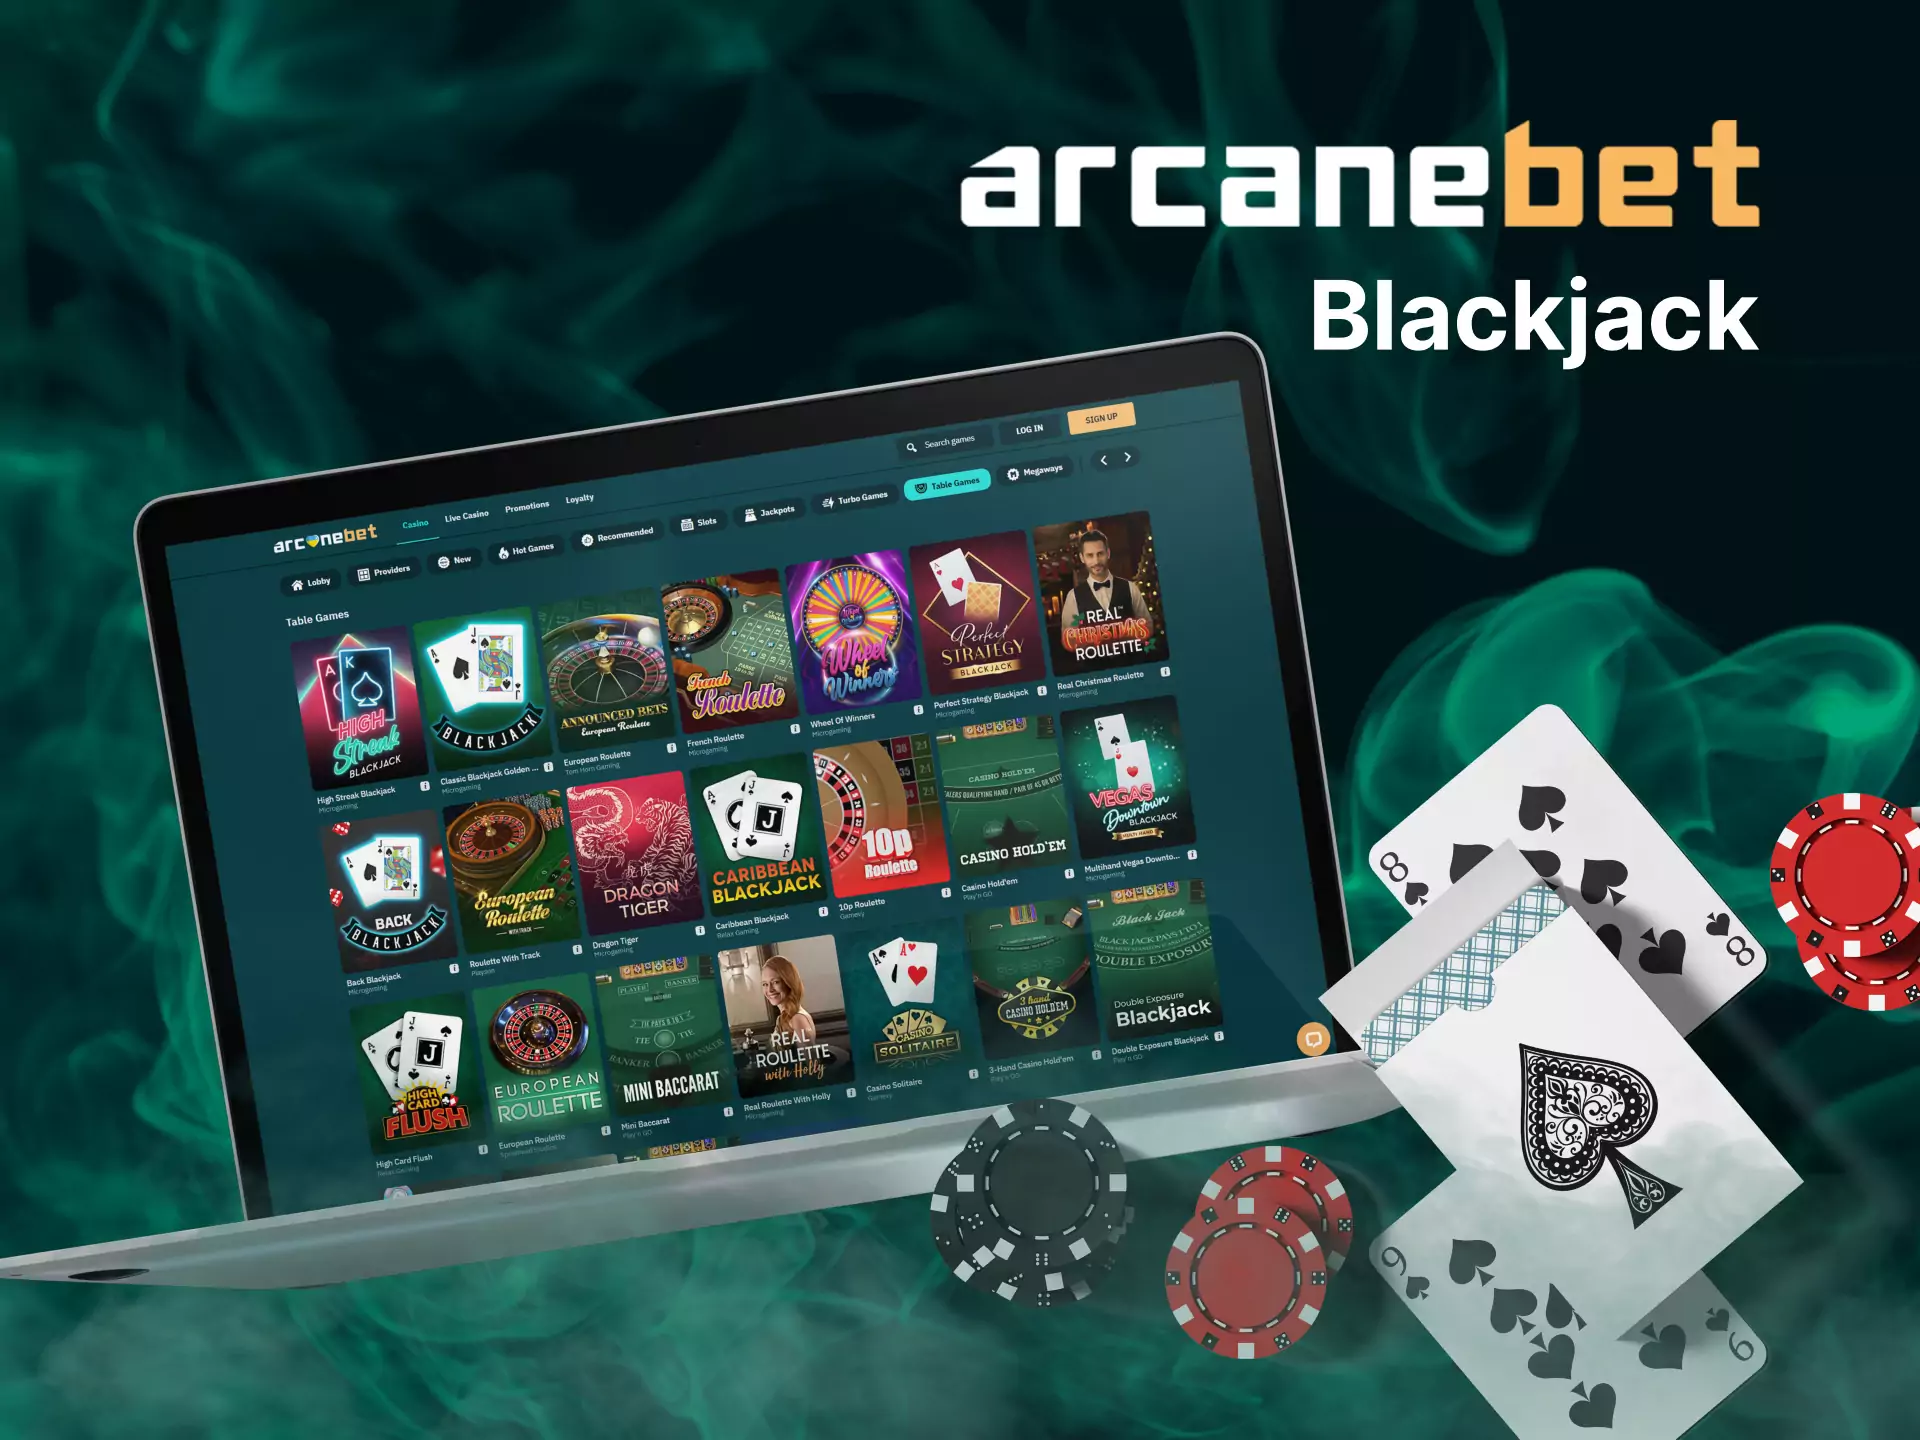 Play blackjack at the Arcanebet casino.